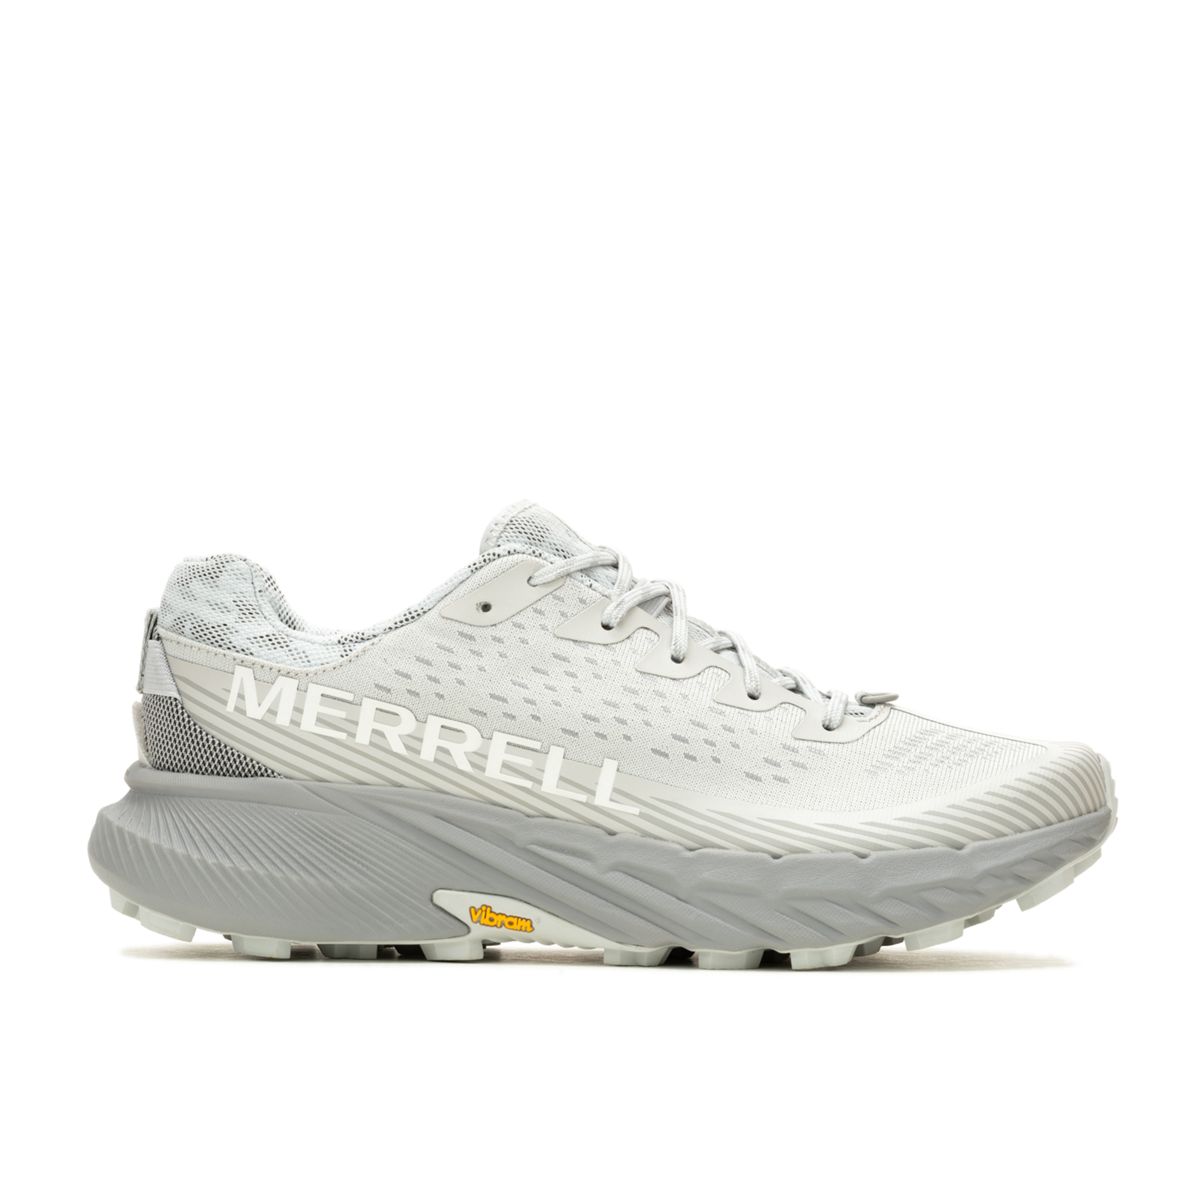 Merrell Agility Peak 5 GTX Gore-Tex Blue Orange Men Trail Outdoors Shoes  J067747 